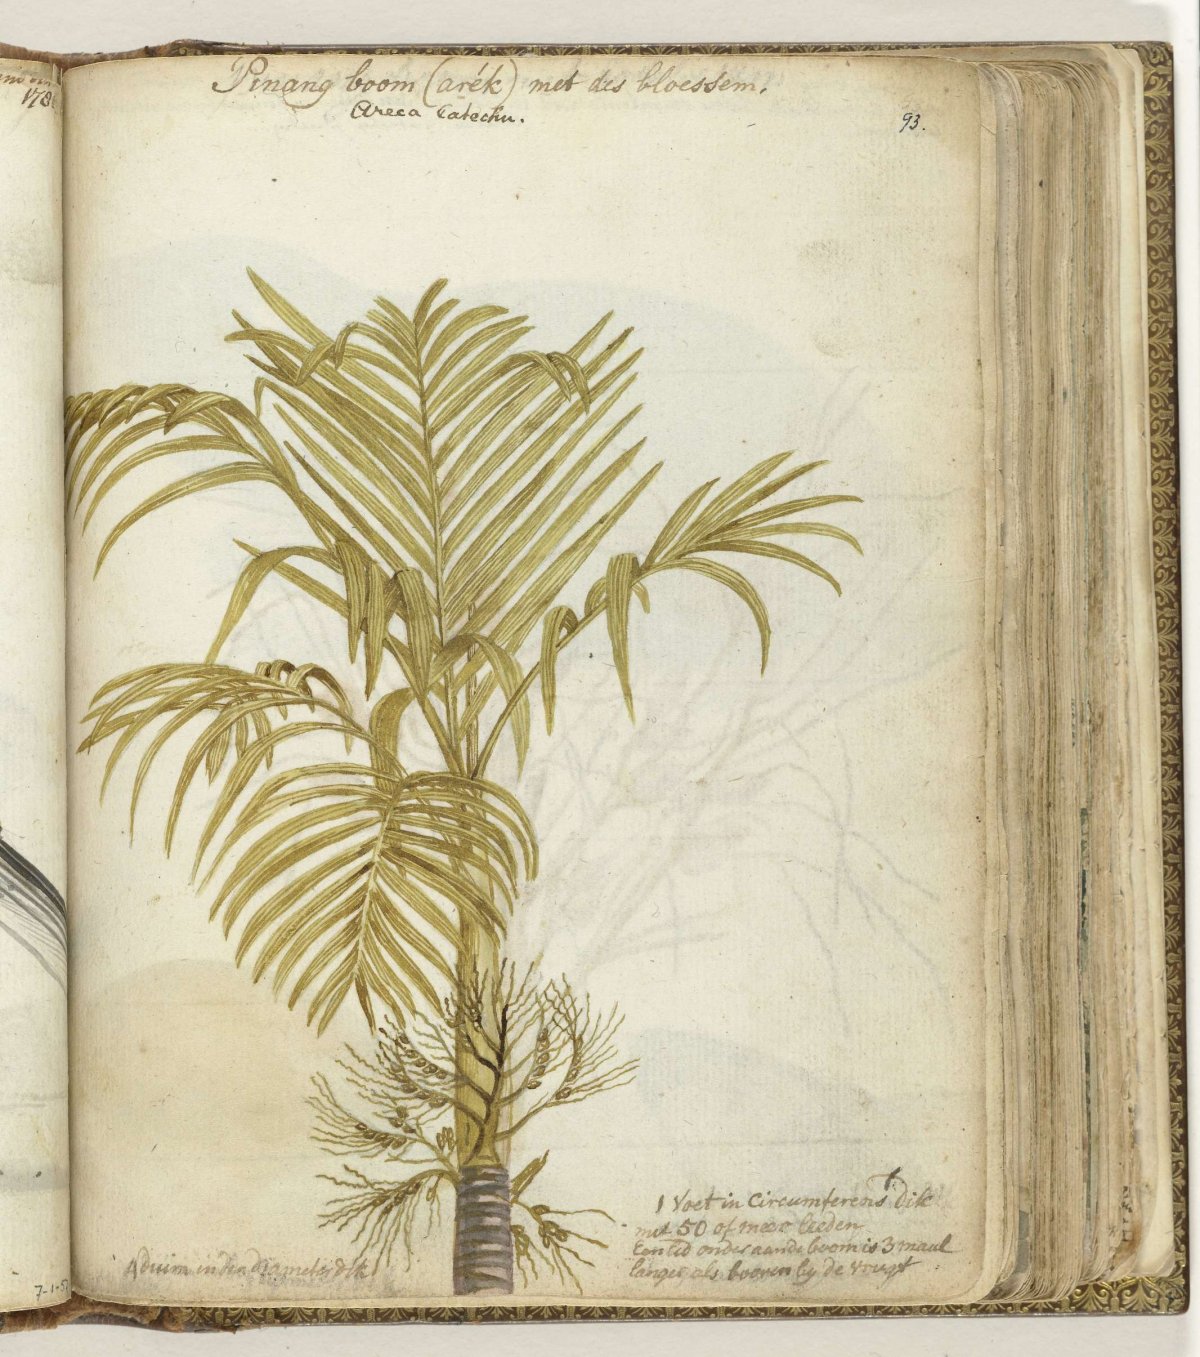 Pinangboom, Jan Brandes, 1785 - 1786